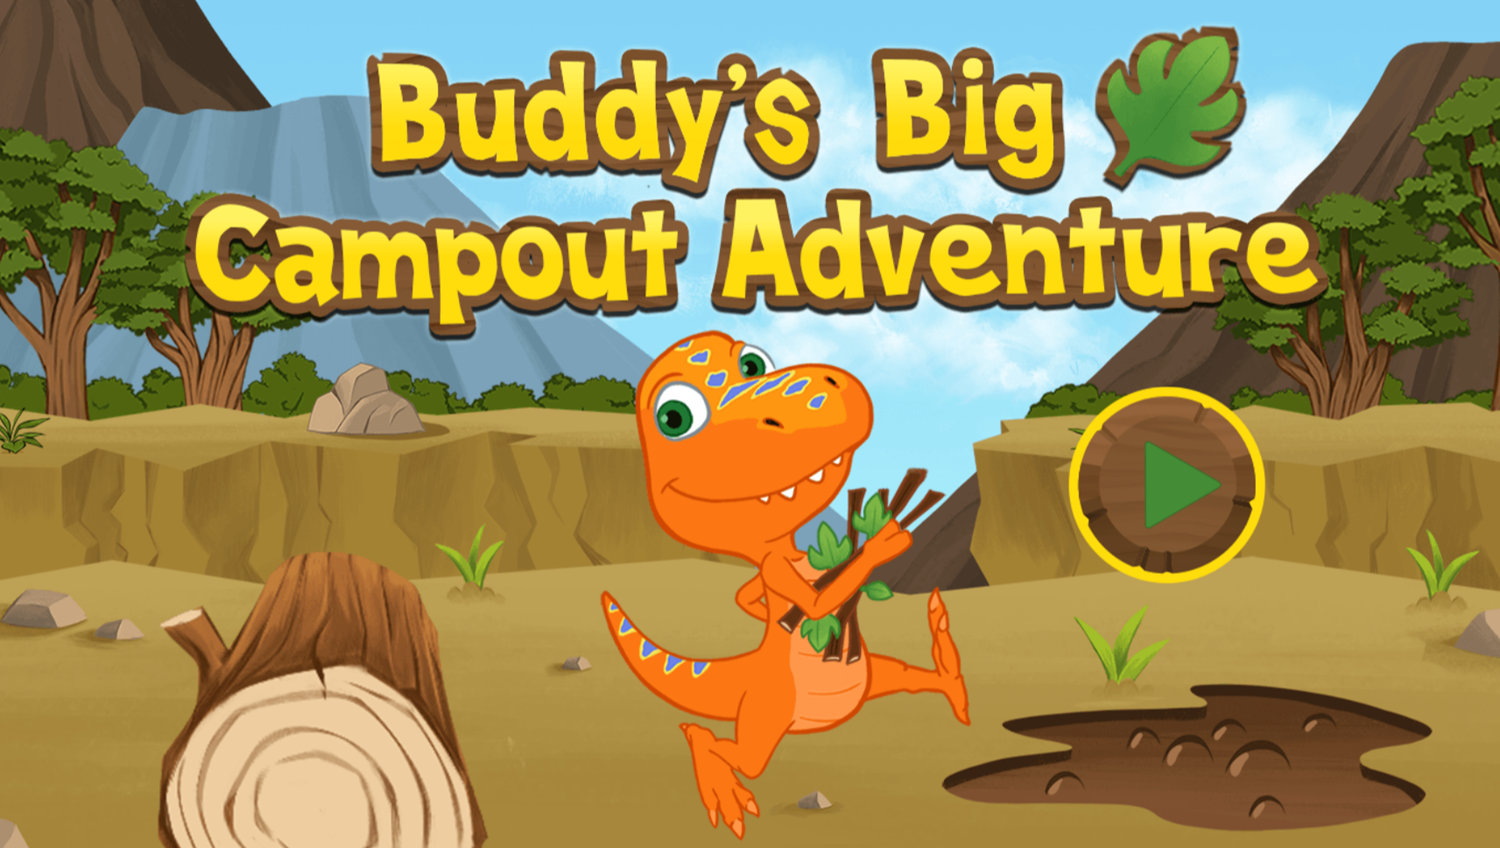 Dinosaur Train Buddy's Big Campout Adventure Game Welcome Screen Screenshot.